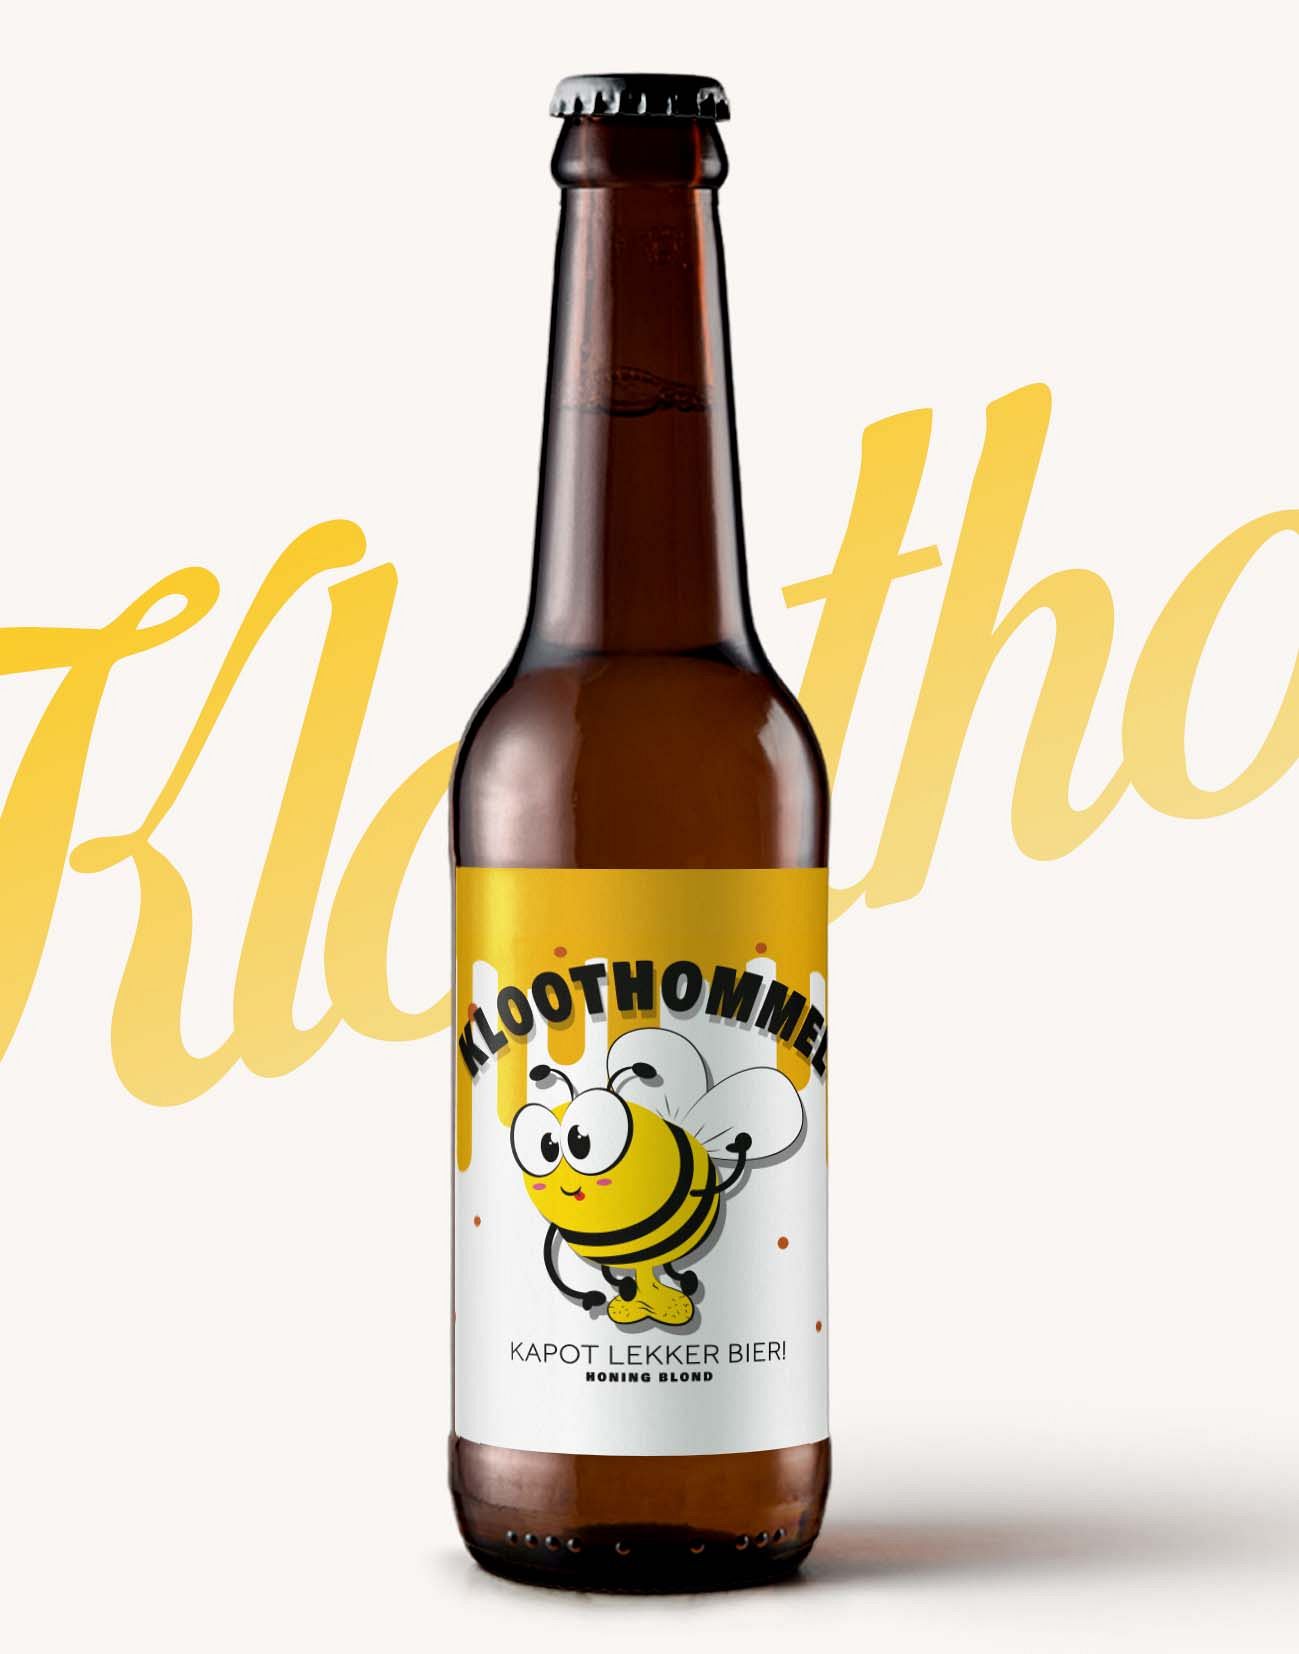 Kloothommel Honing blond bier